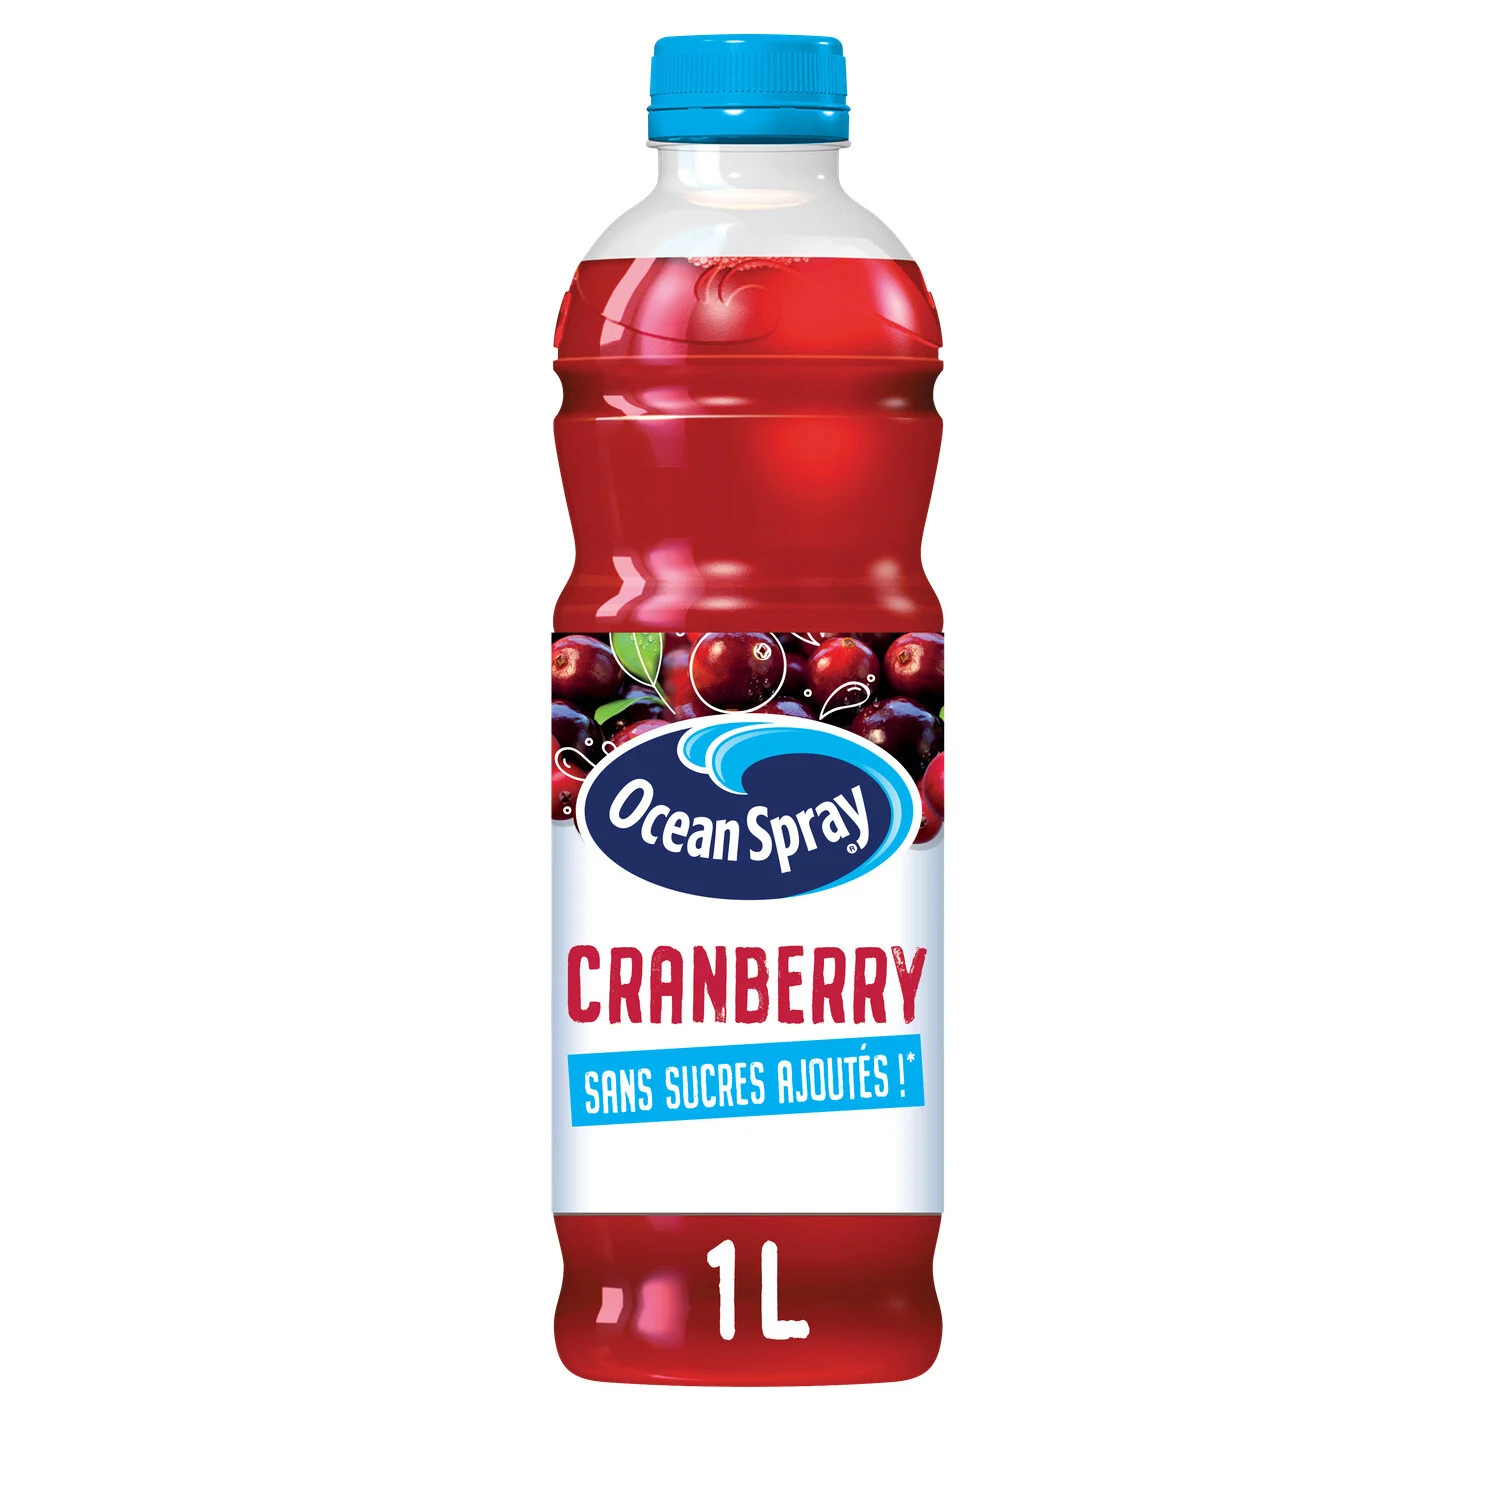 Ocean Spray Cranberry Ss Haustier 1